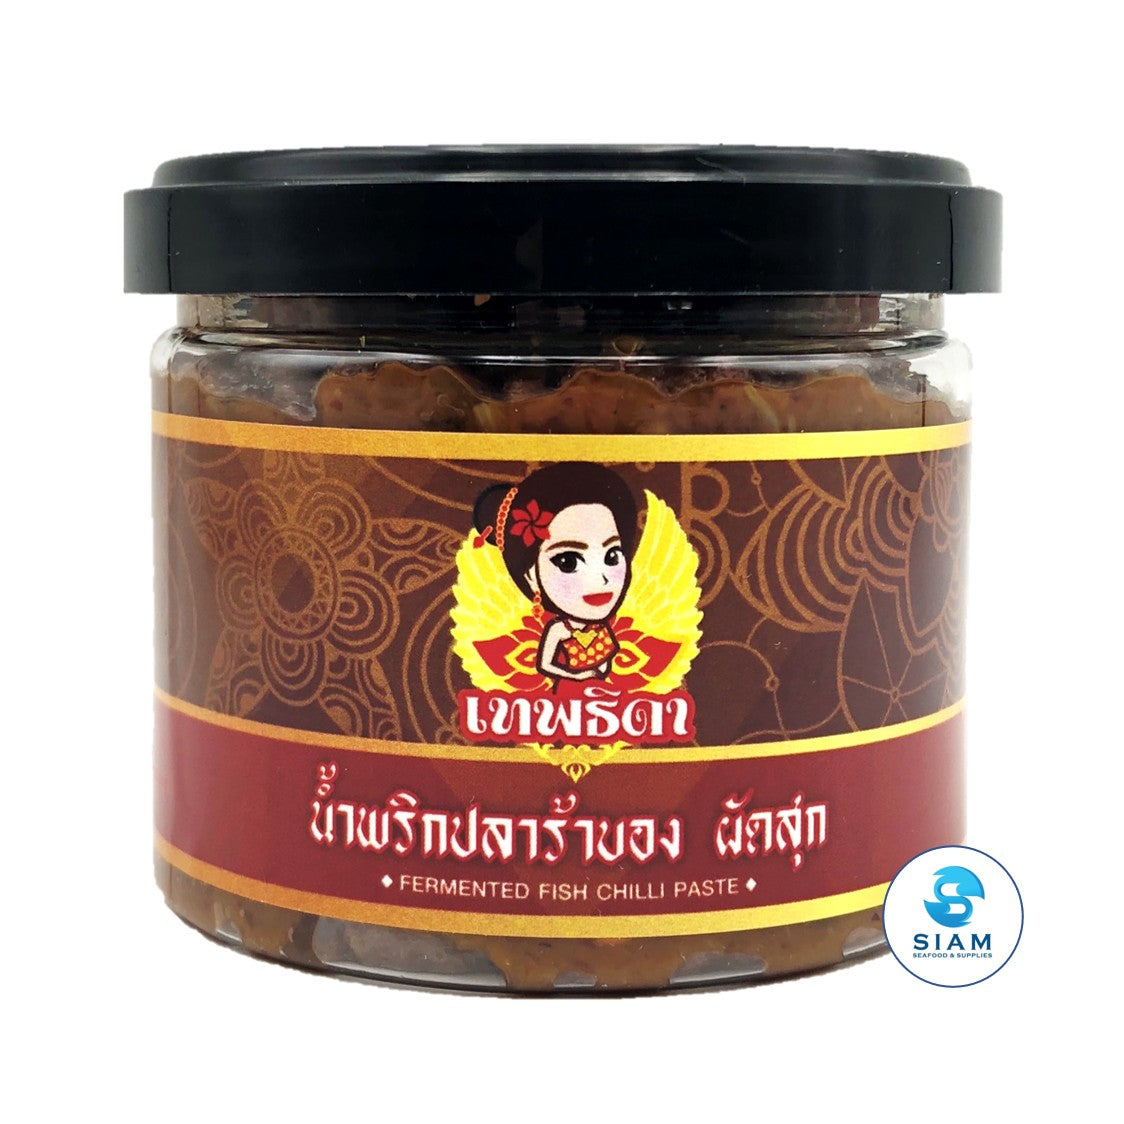 Fermented Fish Chili Paste - Thepthida (6.35 oz-Net Wt 7.4 oz) น้ำพริกปลาร้าบอง ผัดสุก ตราเทพธิดา shippable Siam Store - Thai & Asian Food Market